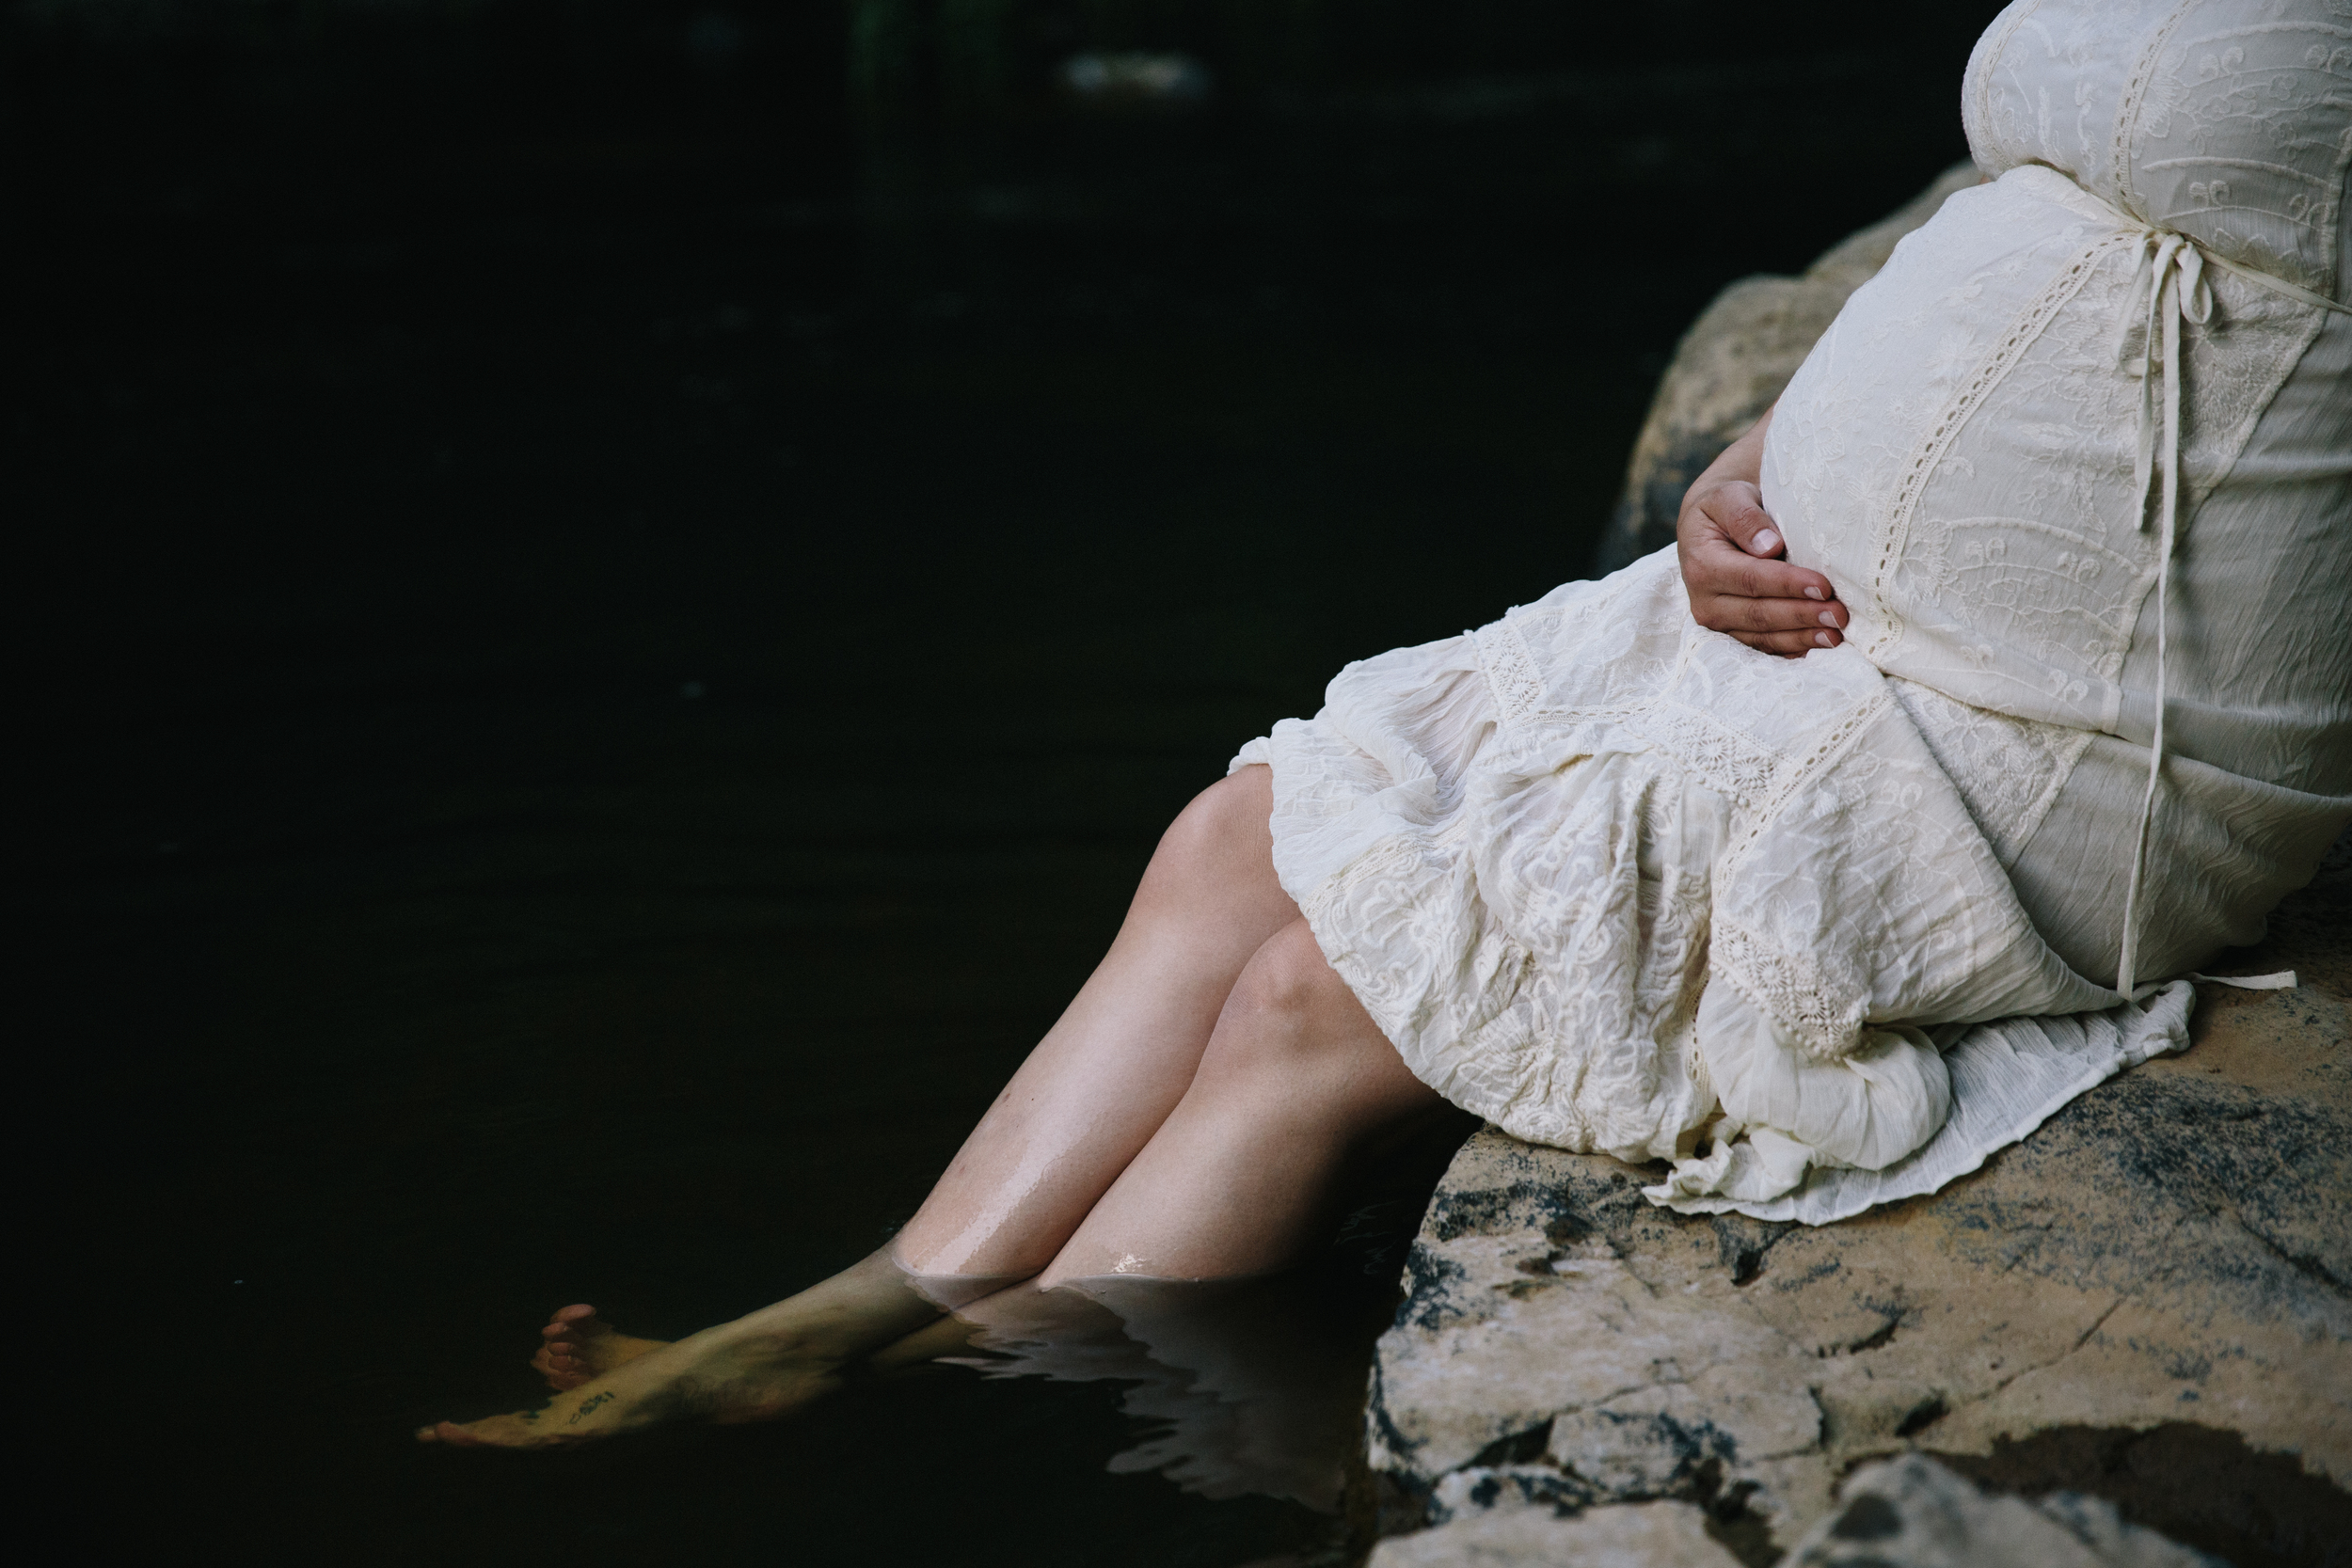 Katrina: maternity session | Eno River in Durham, NC | Merritt Chesson Photography